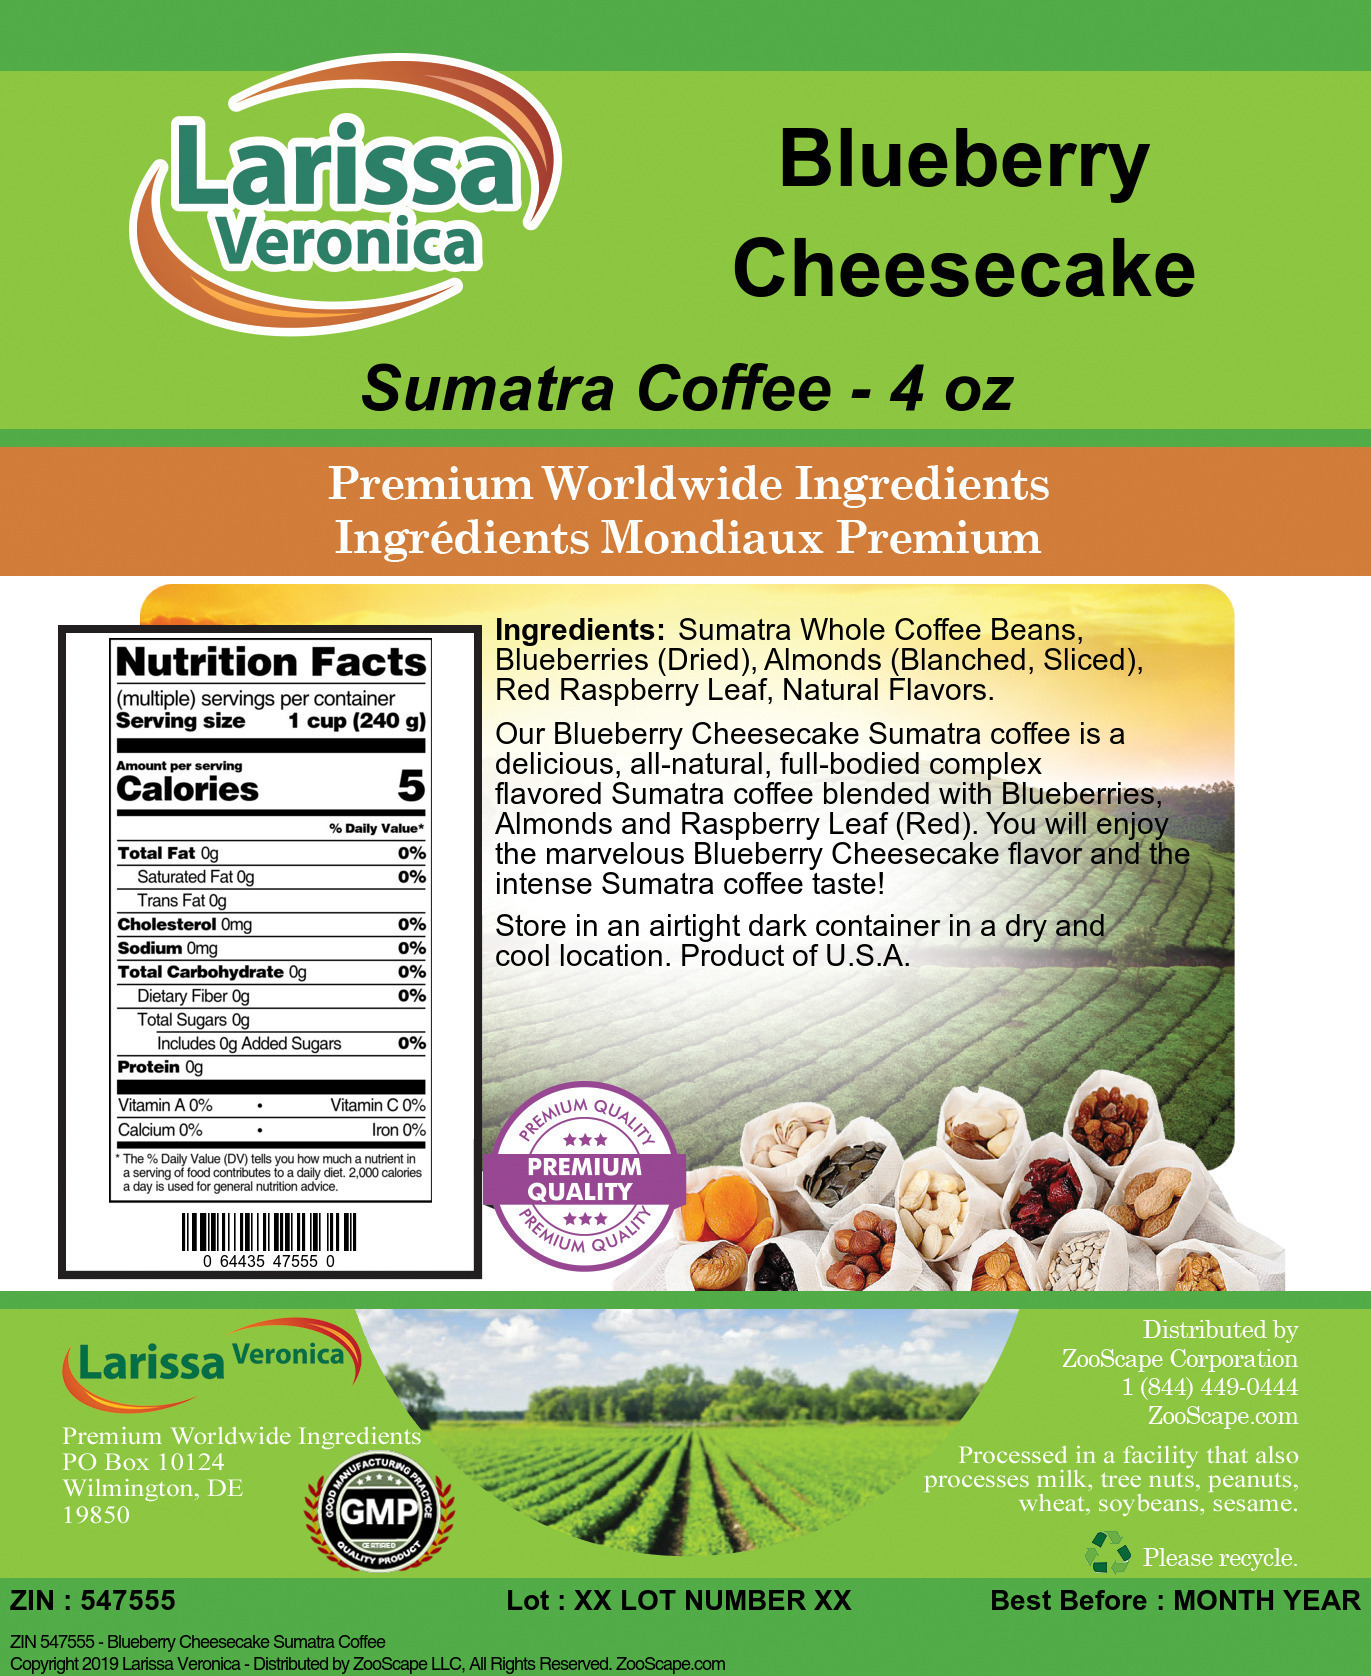 Blueberry Cheesecake Sumatra Coffee - Label